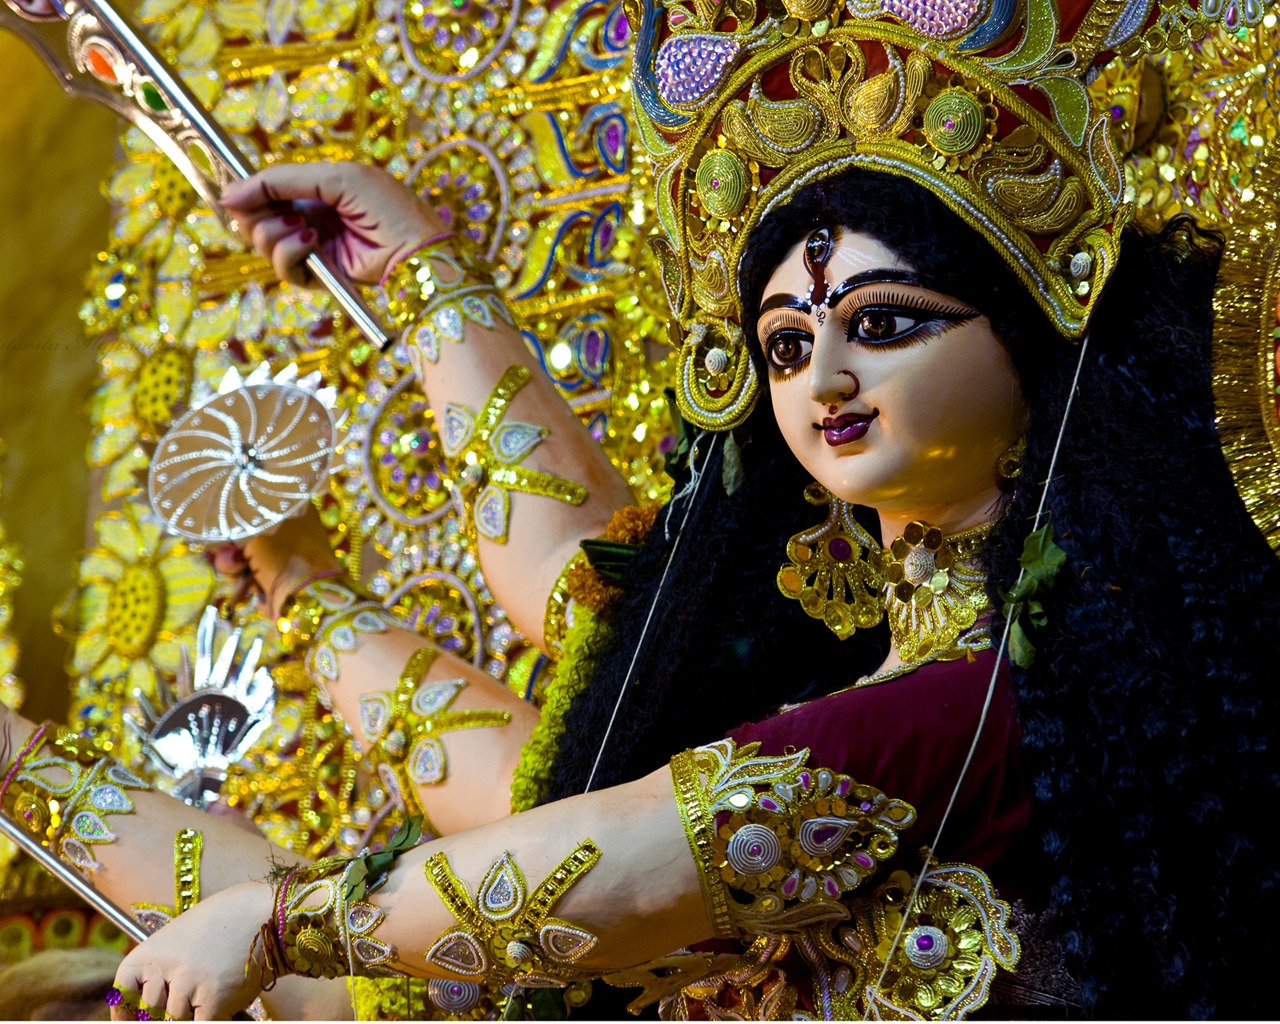 Maa Durga for 1280 x 1024 resolution